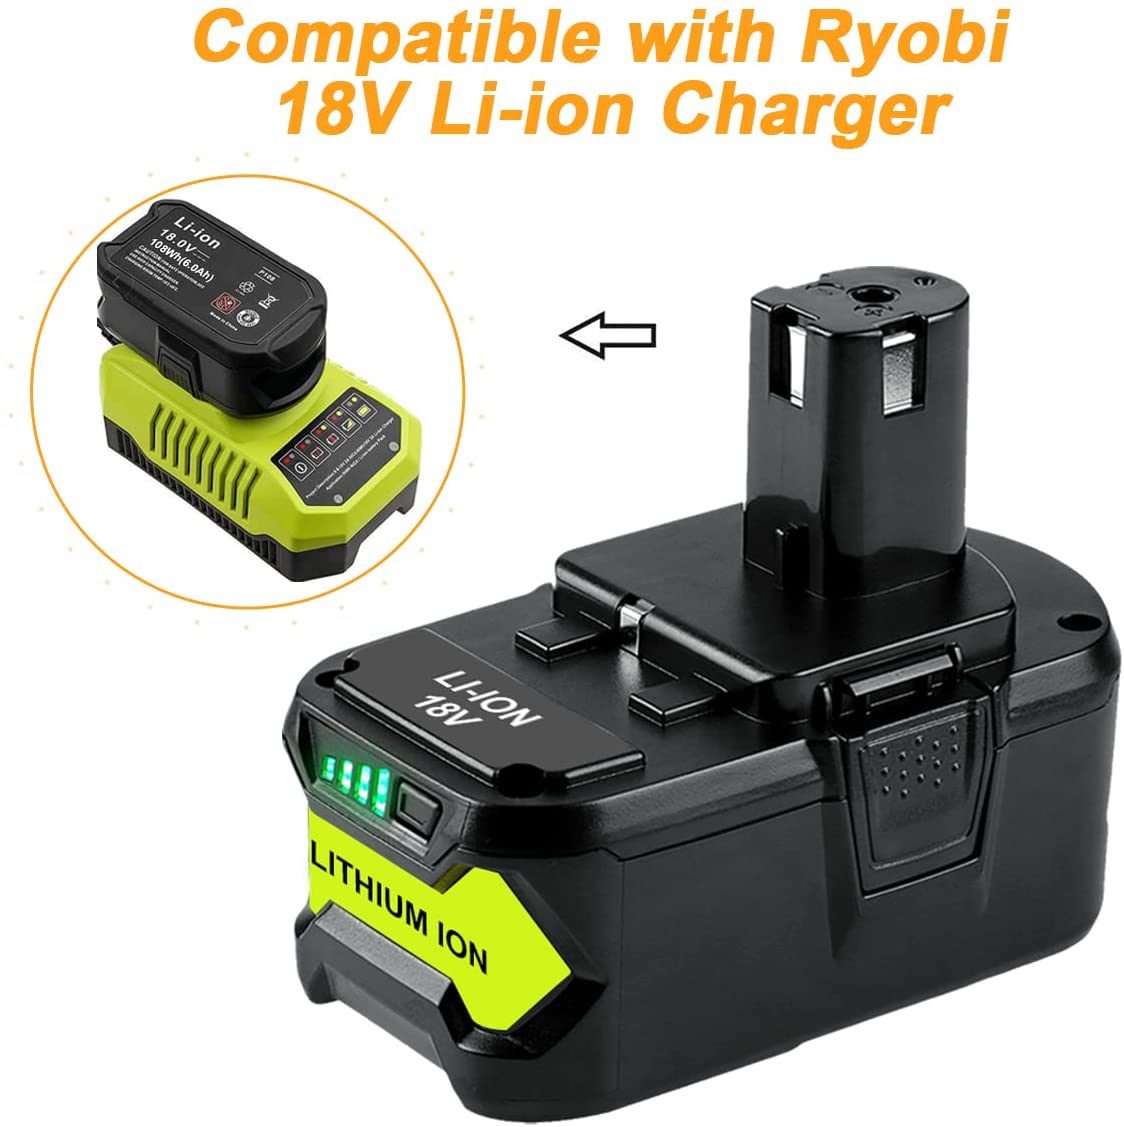 For Ryobi 18V Battery Replacement 6.0Ah | P108 Ryobi Drill Battery